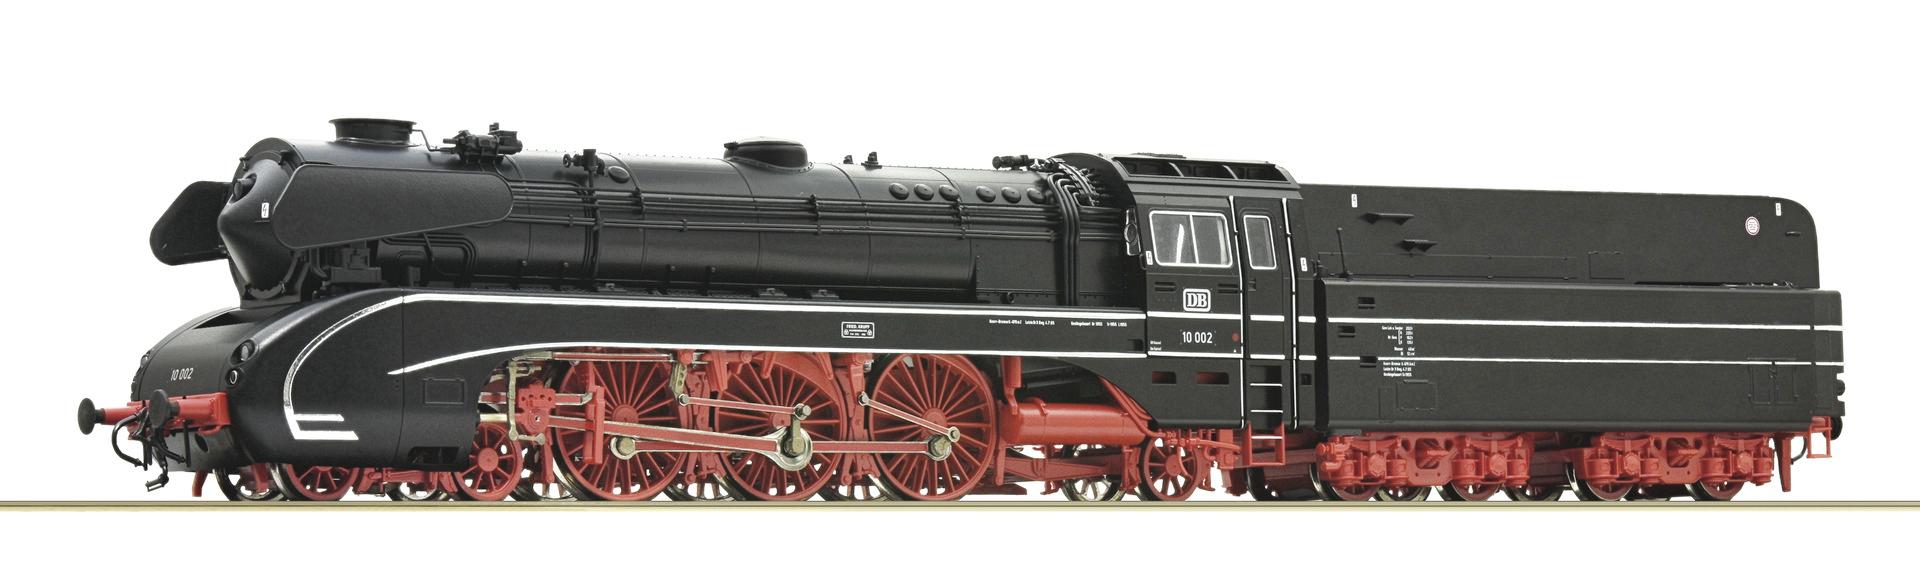 Roco Dampflokomotive 10 002, DB